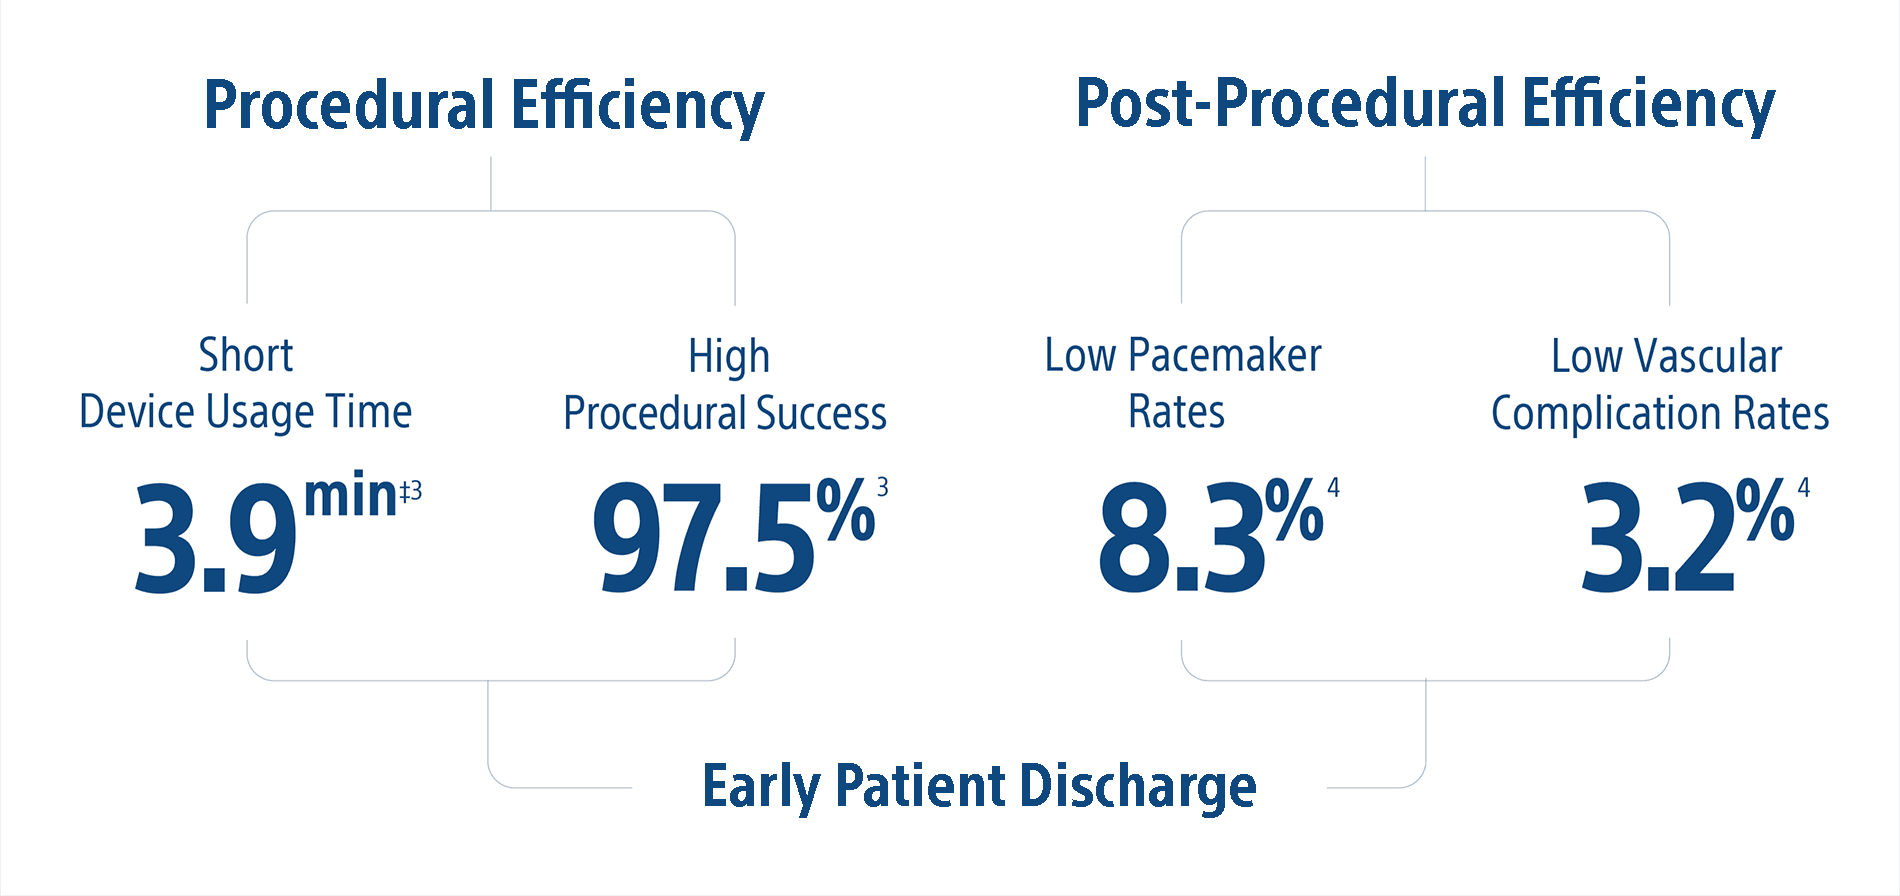 Efficient procedure diagram showing data on procedurale efficiency and post-procedural efficiency